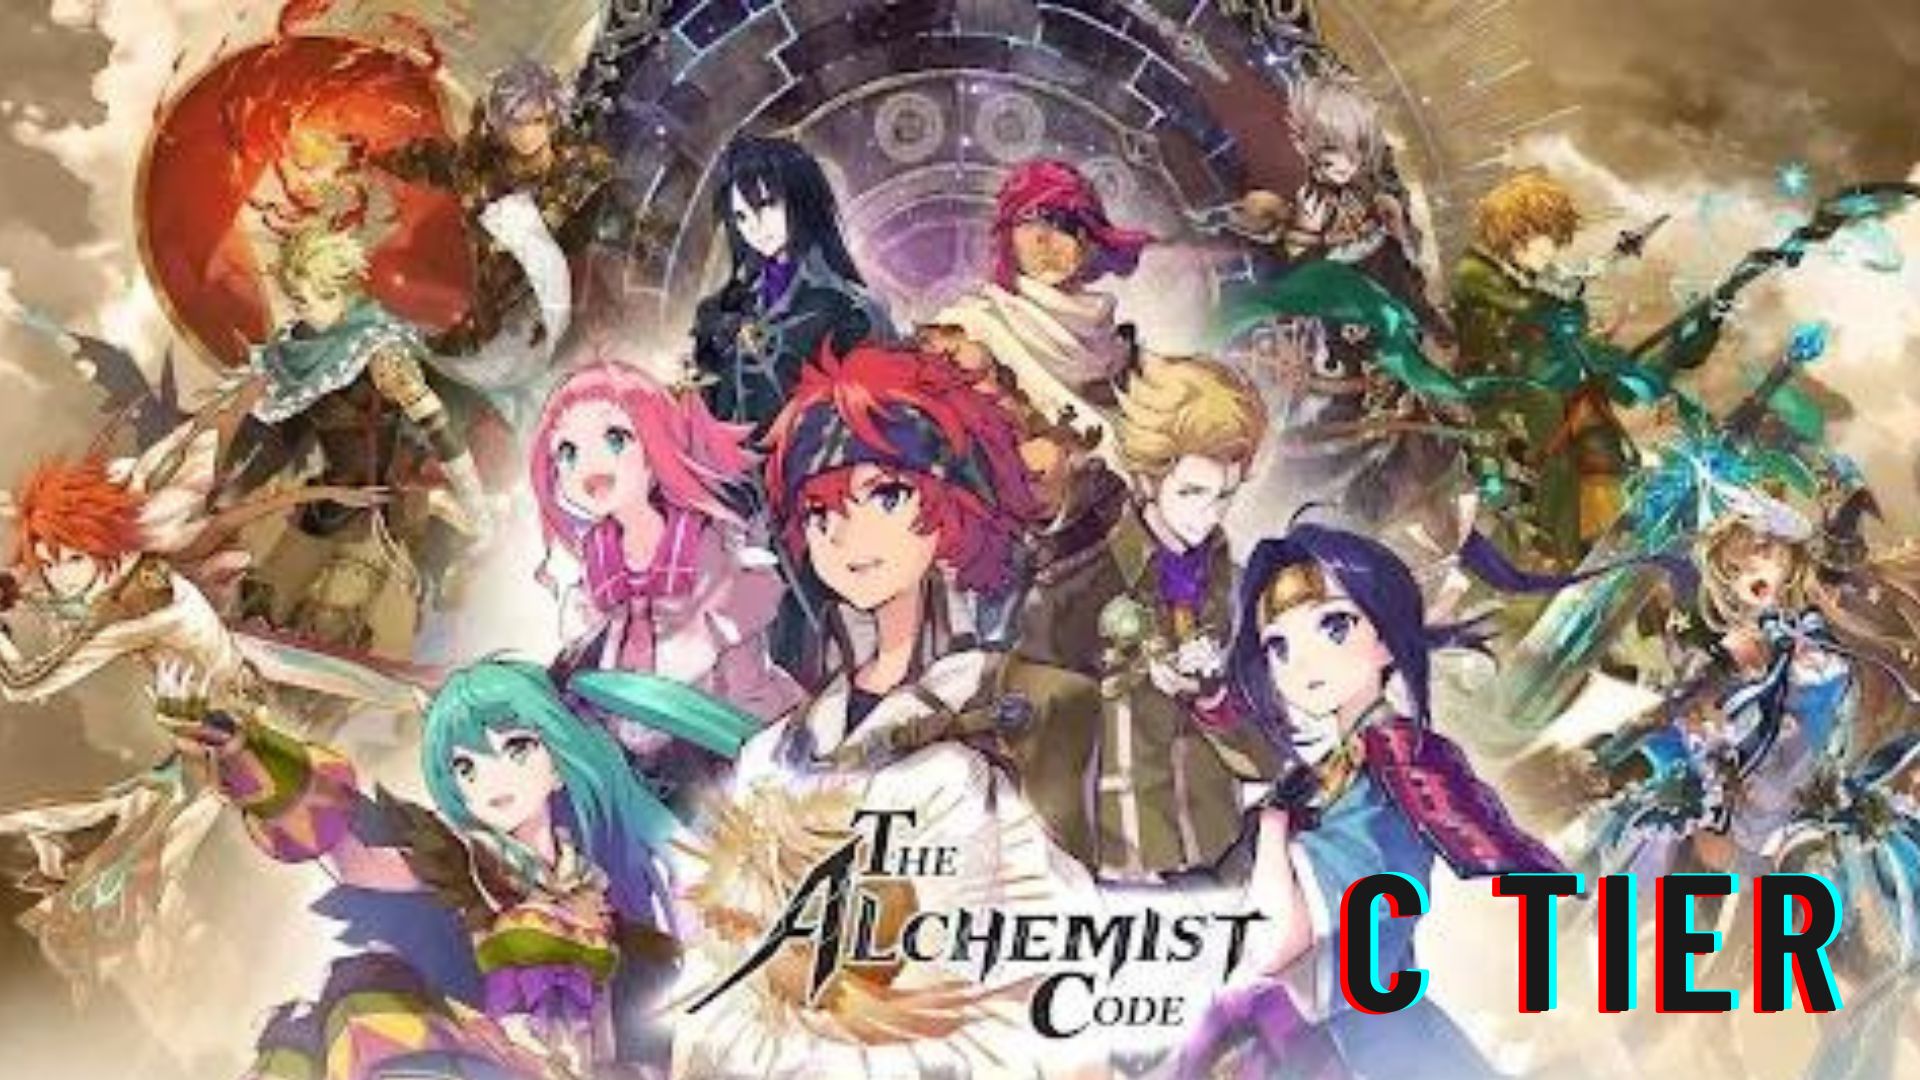 Bad characters of Alchemist Code